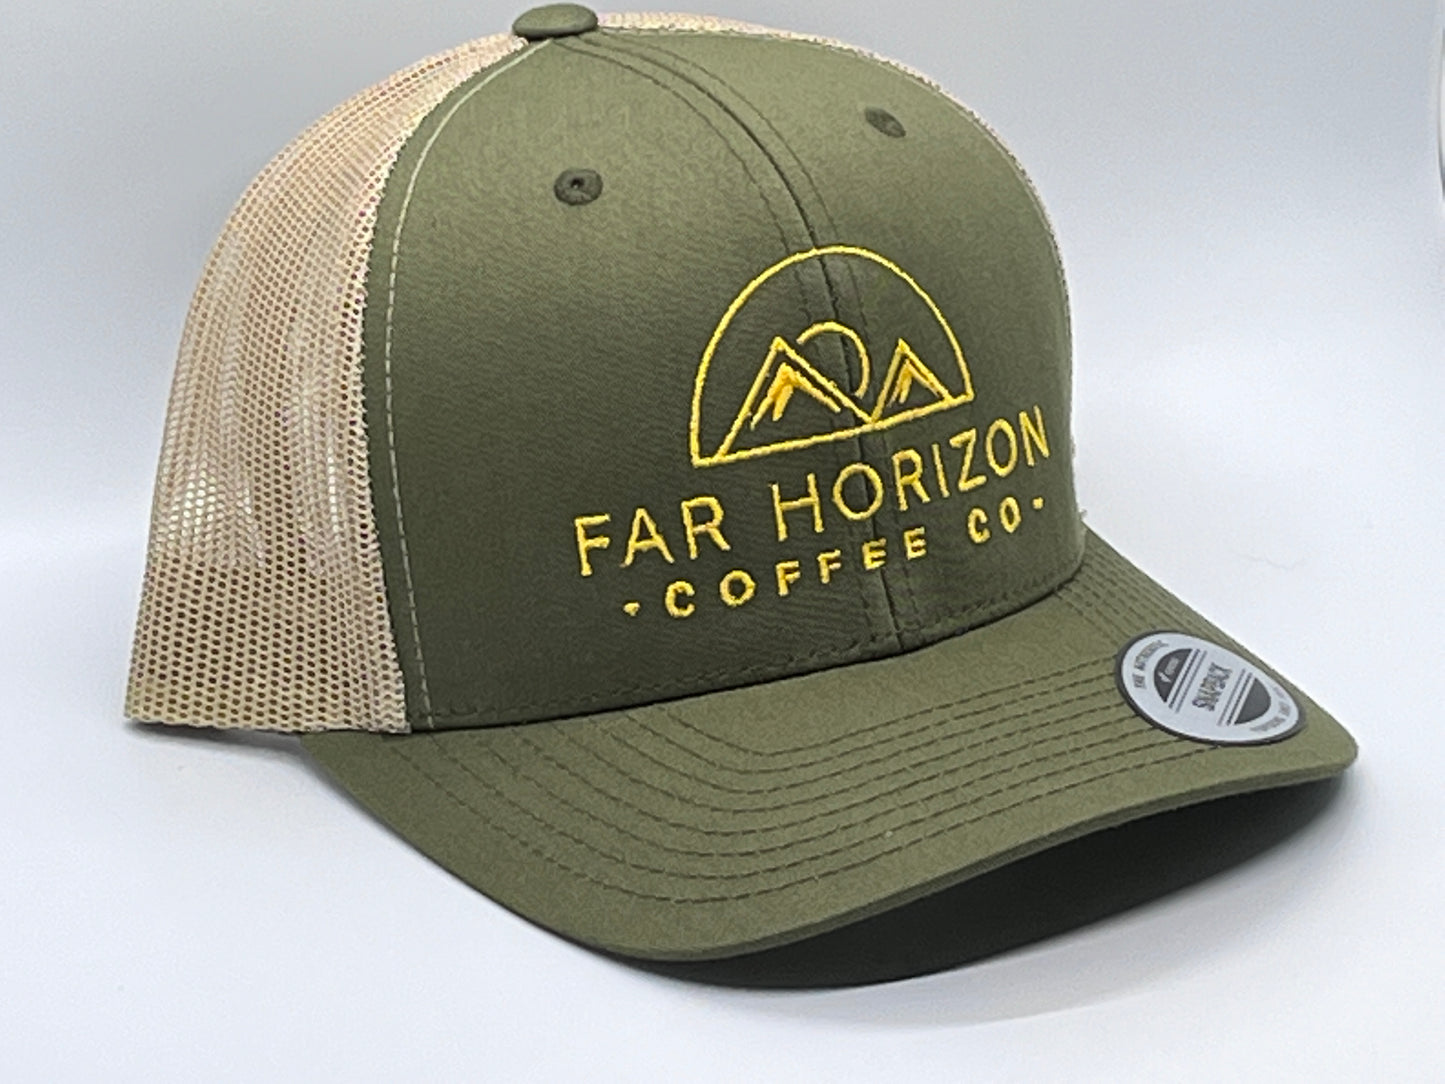 Far Horizon Coffee Hats